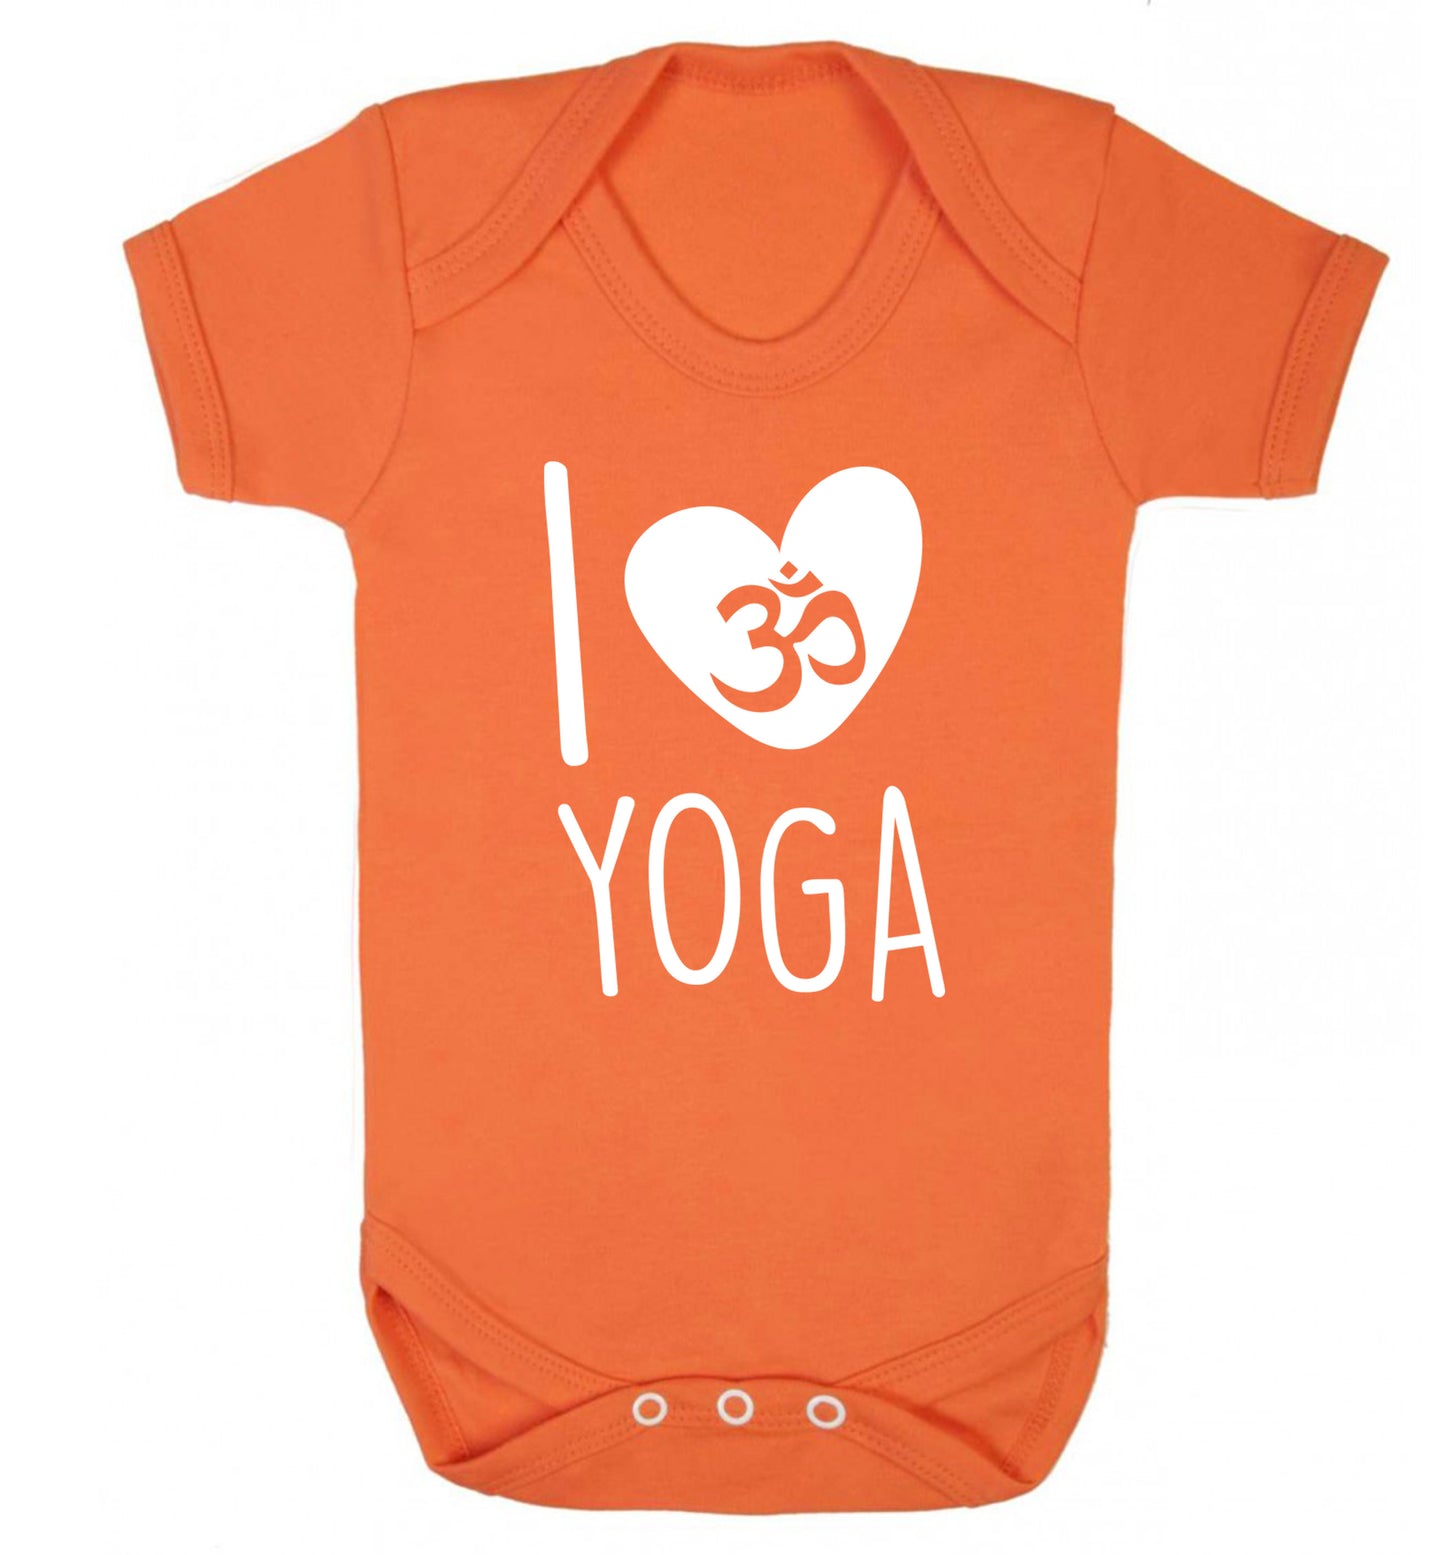 I love yoga Baby Vest orange 18-24 months